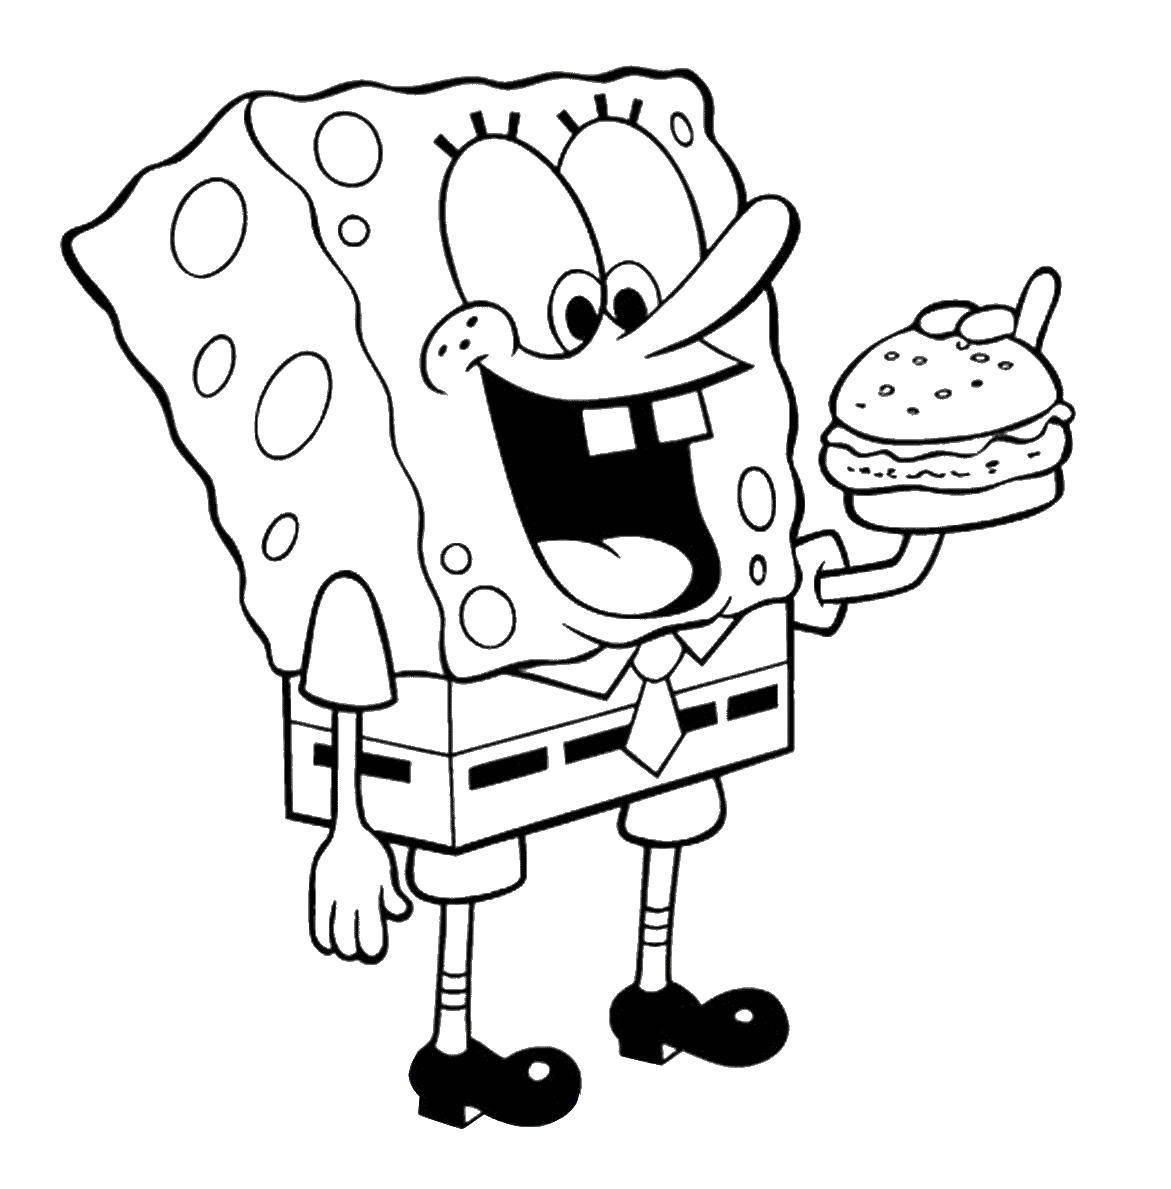 Coloring Spongebob eats. Category Spongebob. Tags:  spongebob cartoons, Krabby Patty.